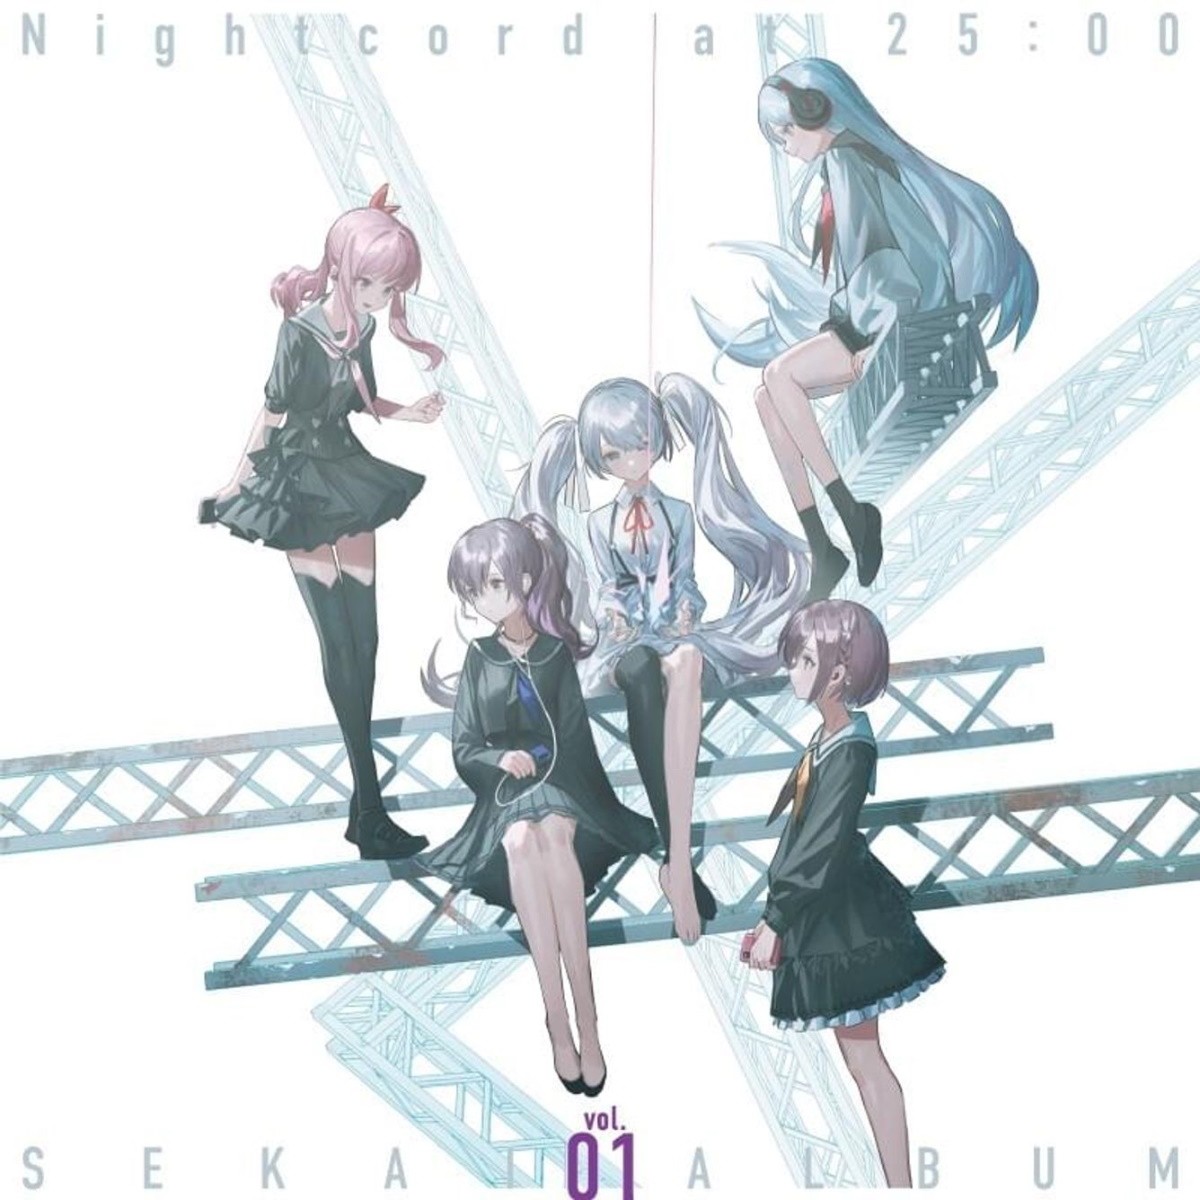 Cover art for『Nightcord at 25:00 - Totemo Itai Itagaritai』from the release『Nightcord at 25:00 SEKAI ALBUM vol.1』